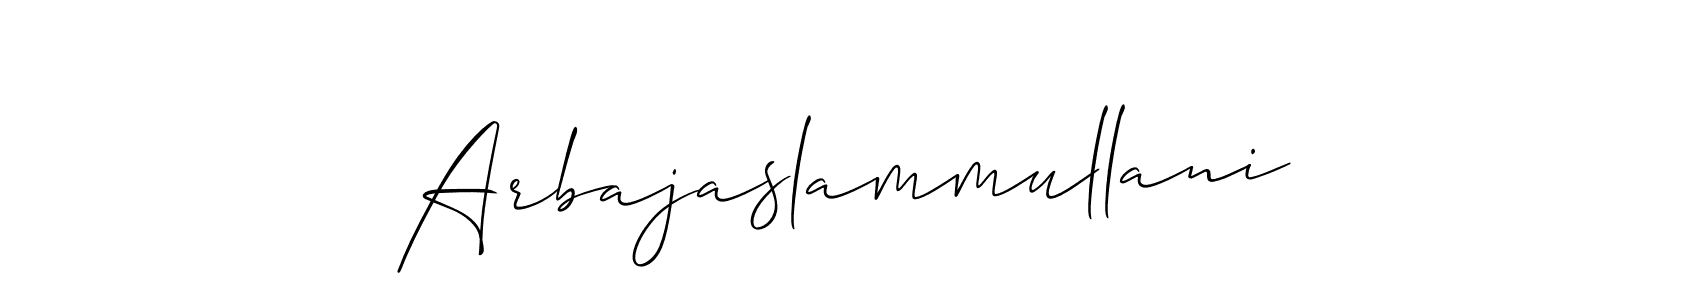 Make a beautiful signature design for name Arbajaslammullani. Use this online signature maker to create a handwritten signature for free. Arbajaslammullani signature style 2 images and pictures png